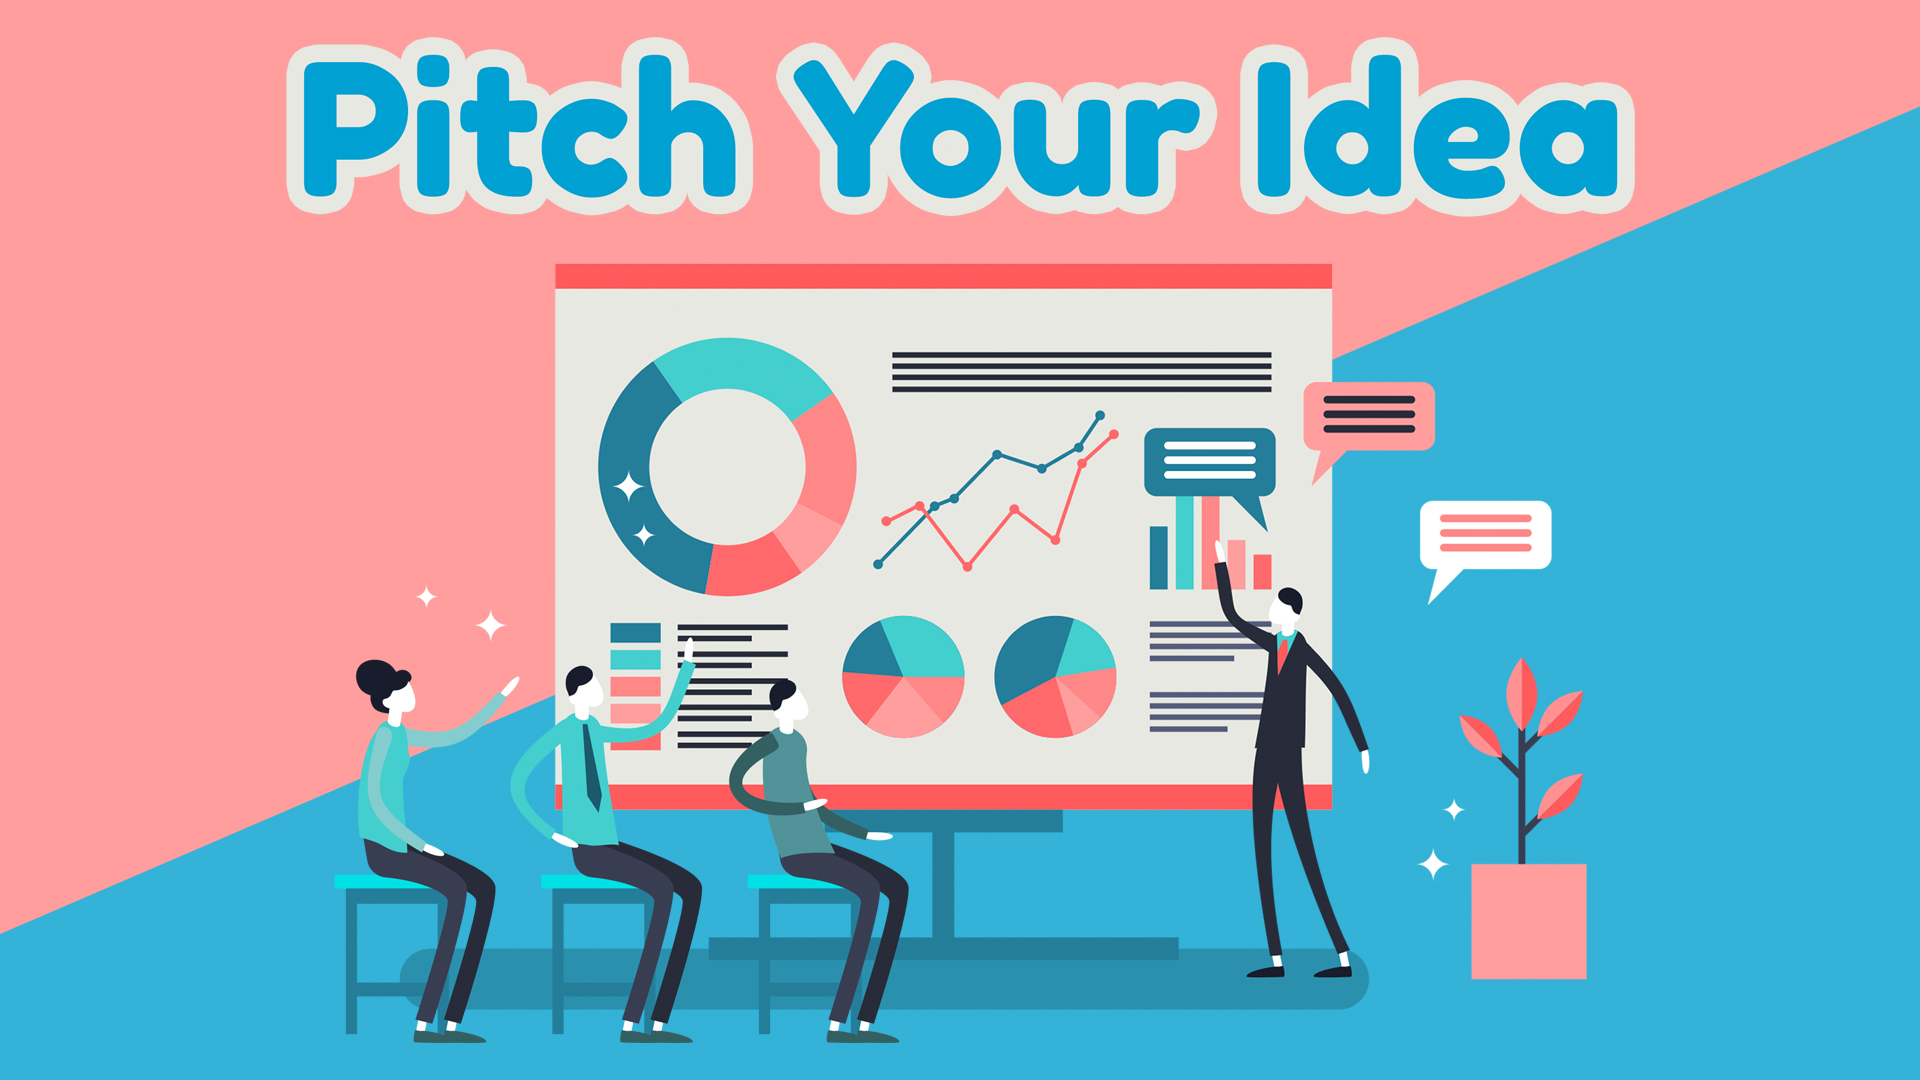 Pitch your idea